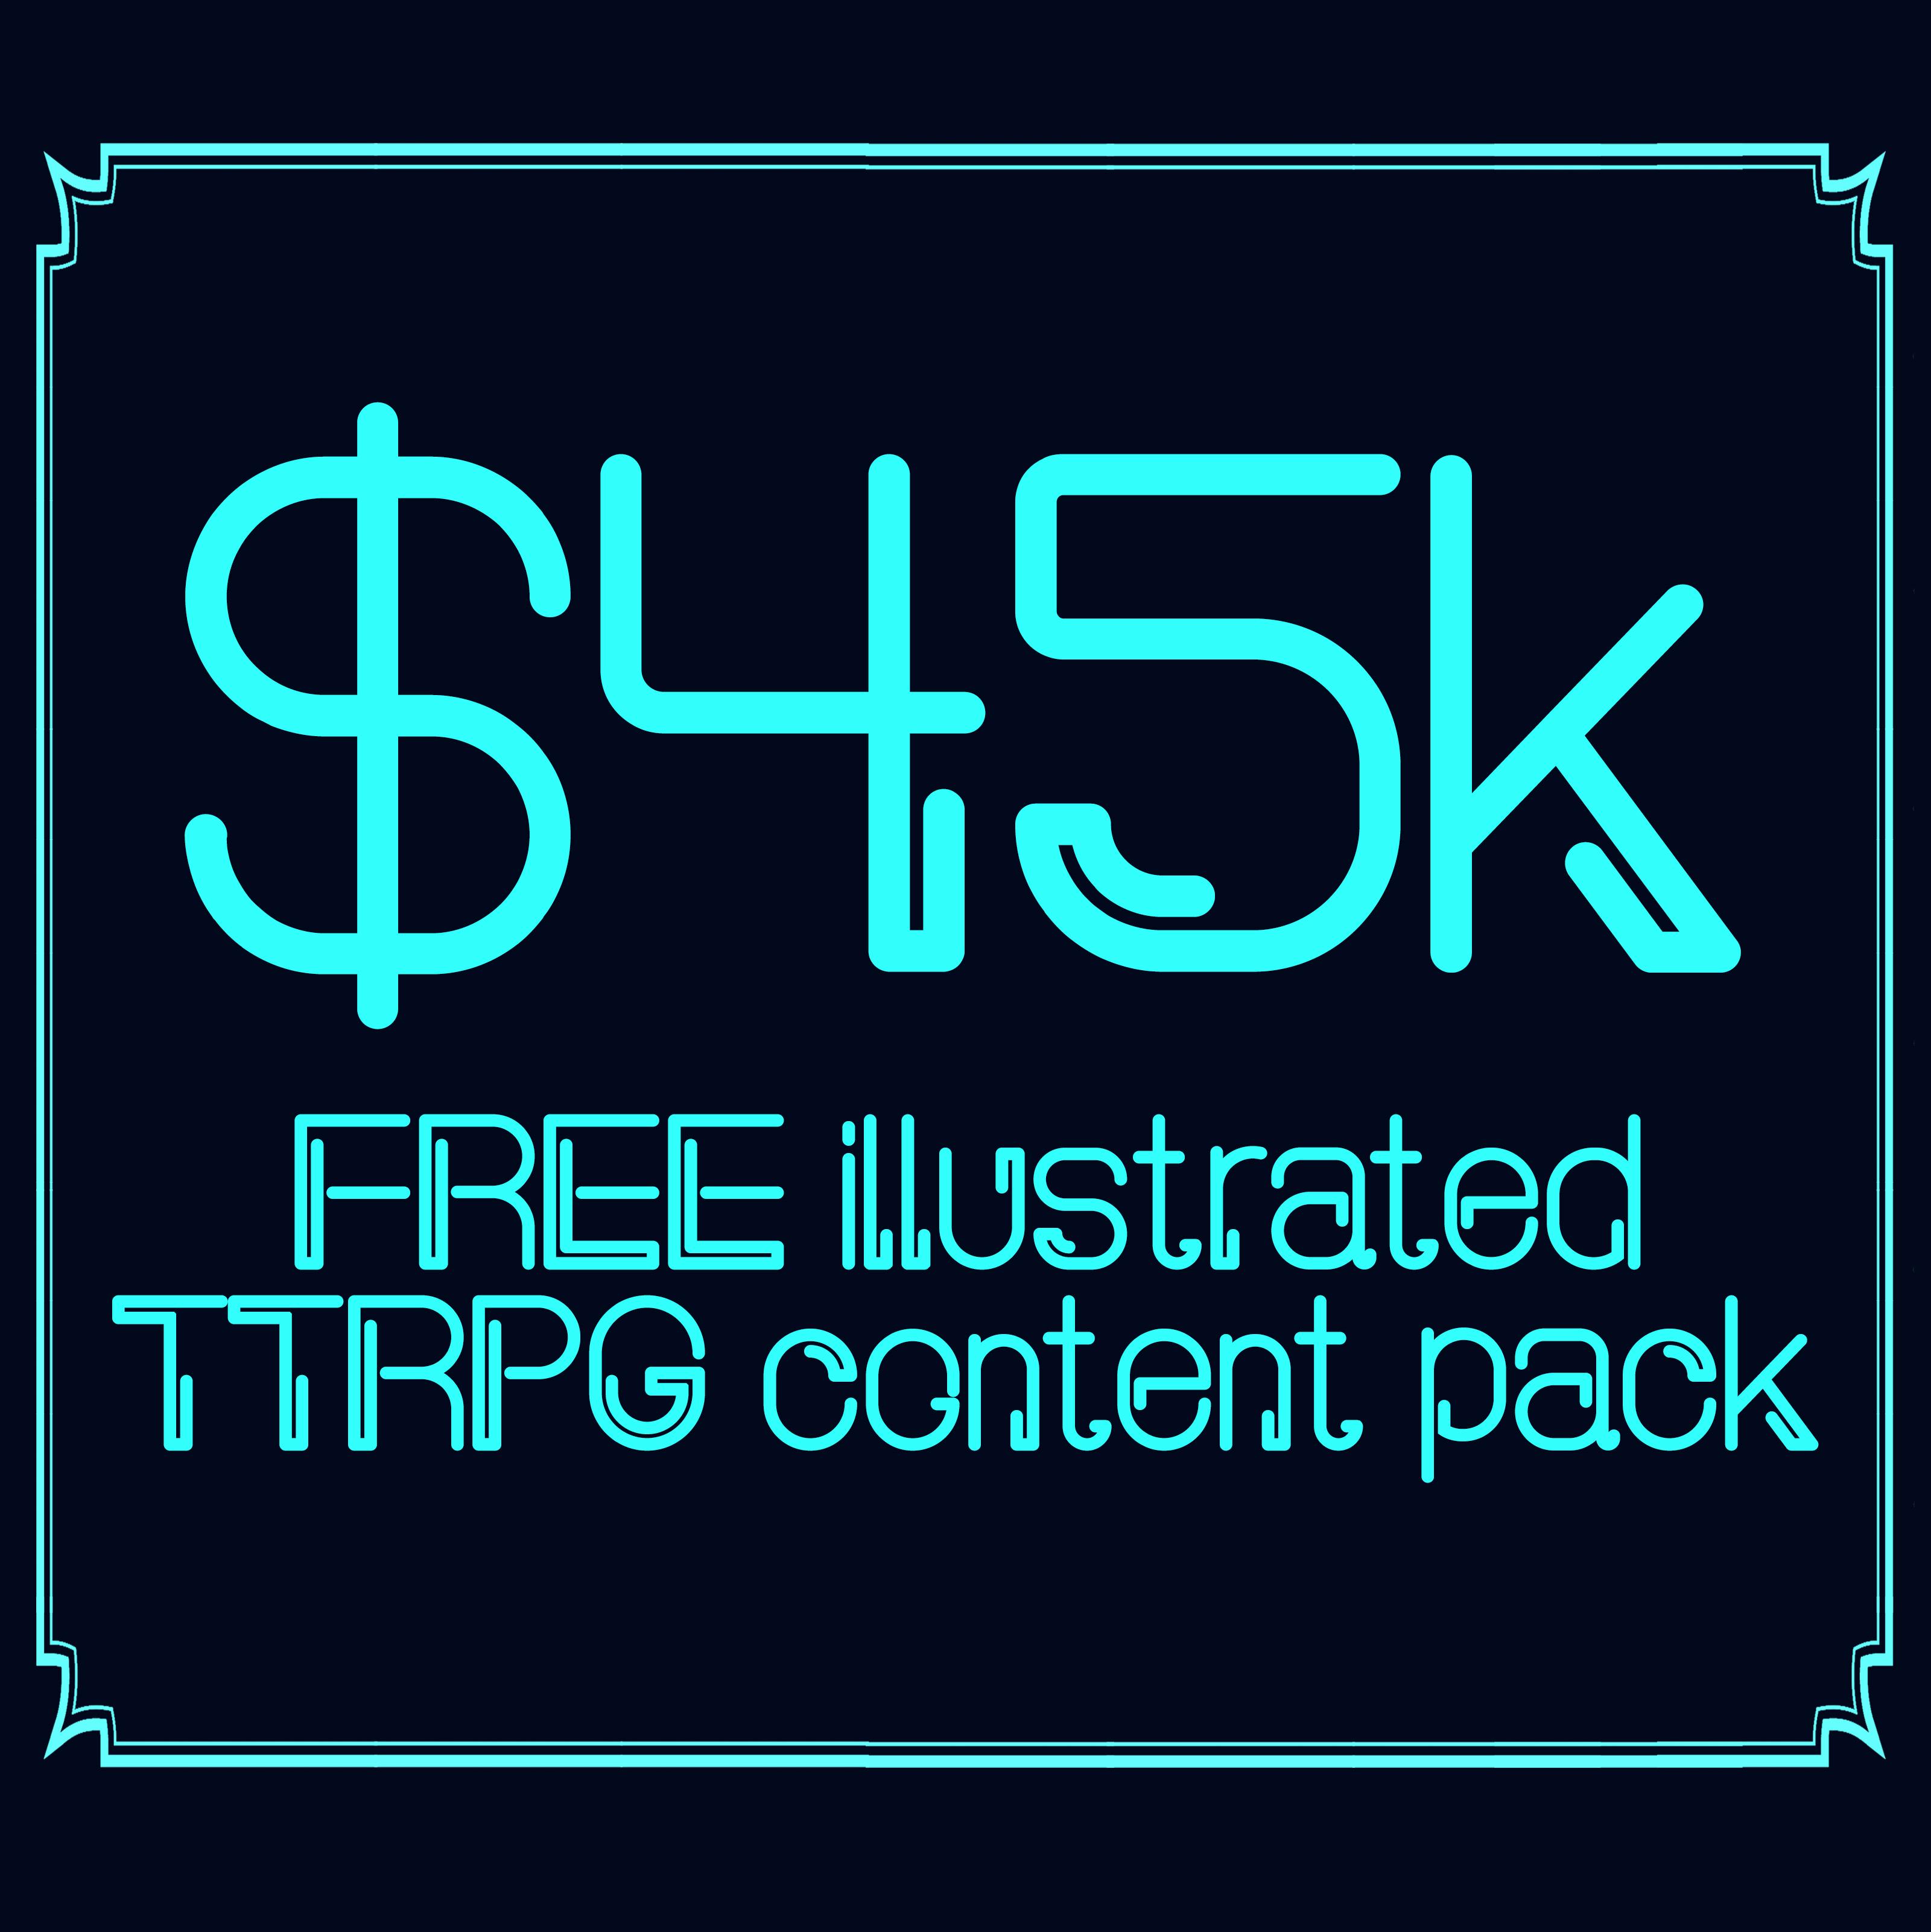 FREE illustrated TTRPG content bundle